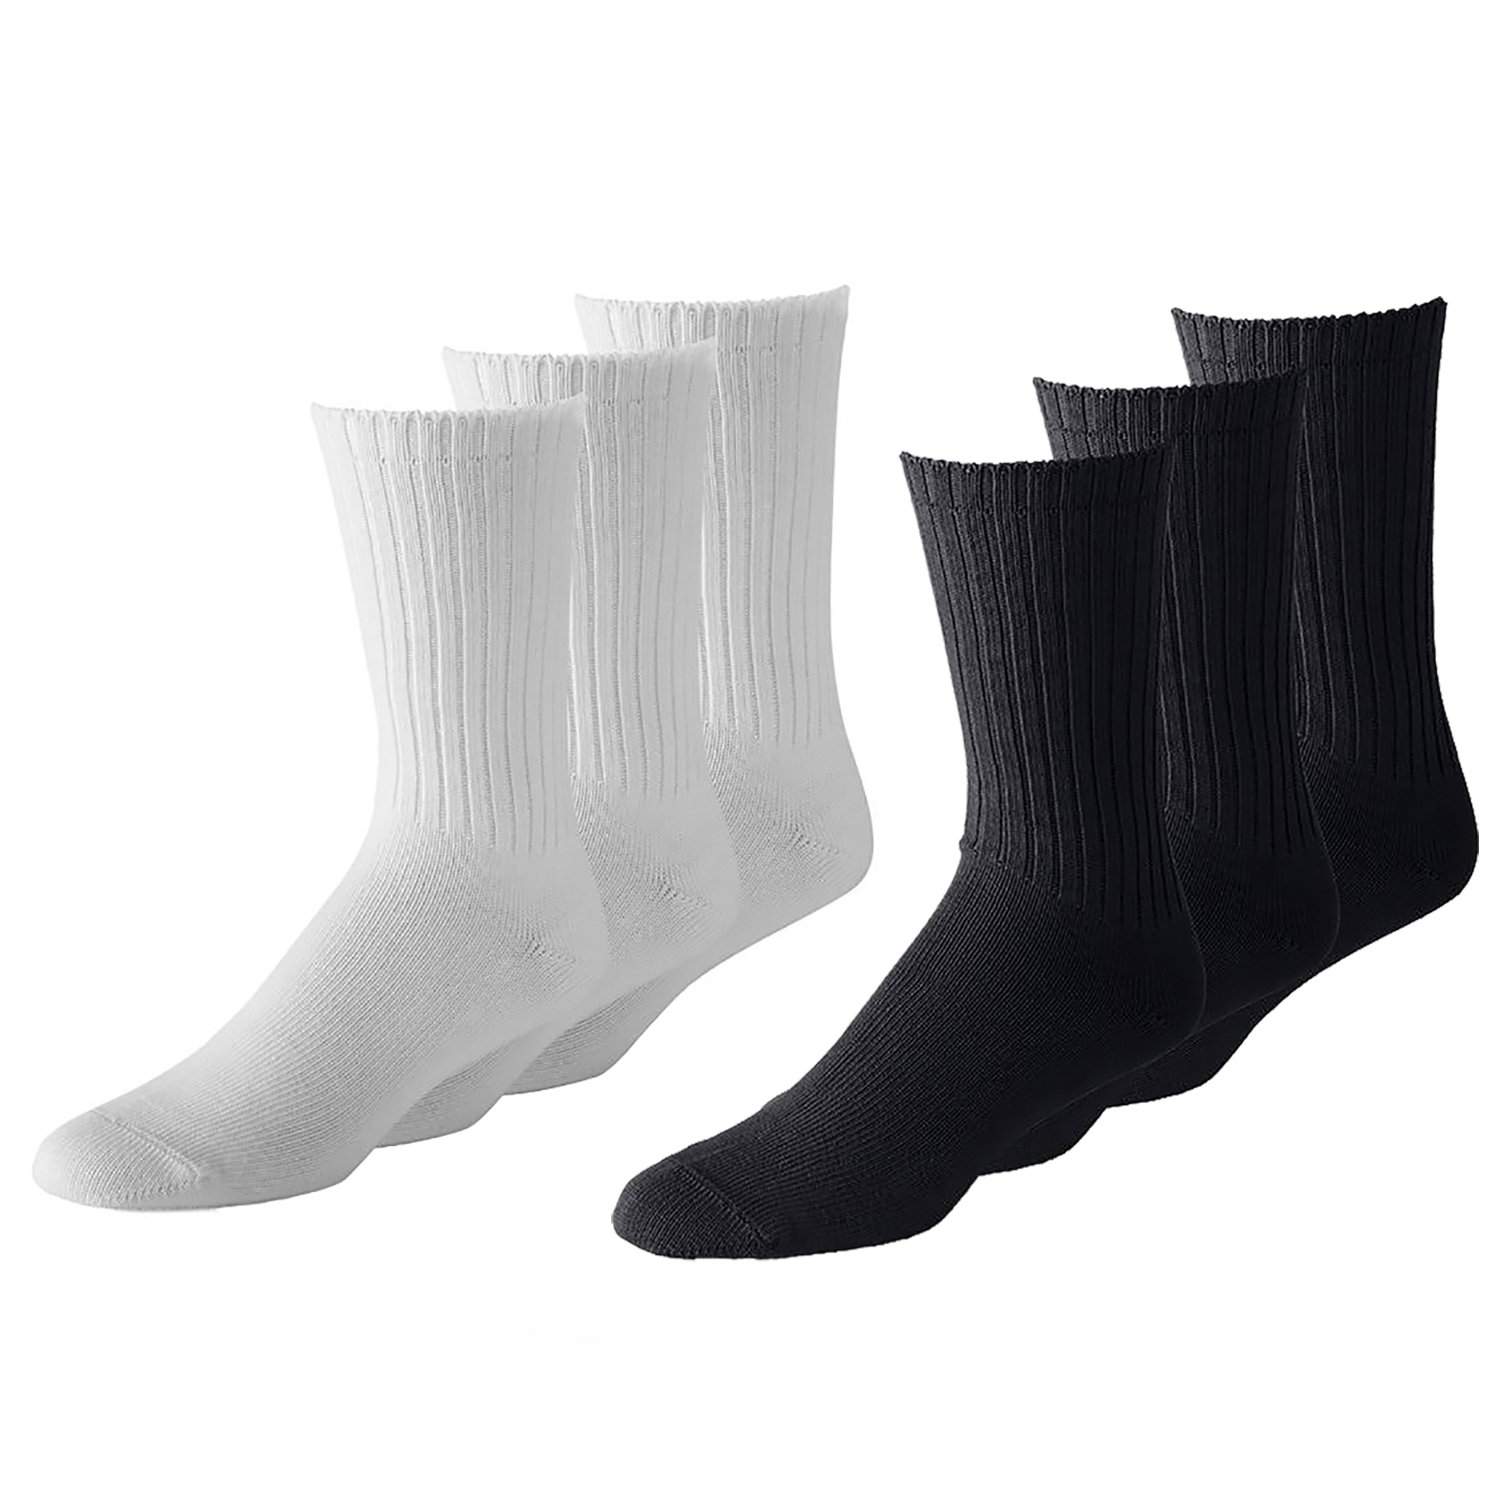 Unisex Crew Athletic Sports Cotton Socks  36 Pack